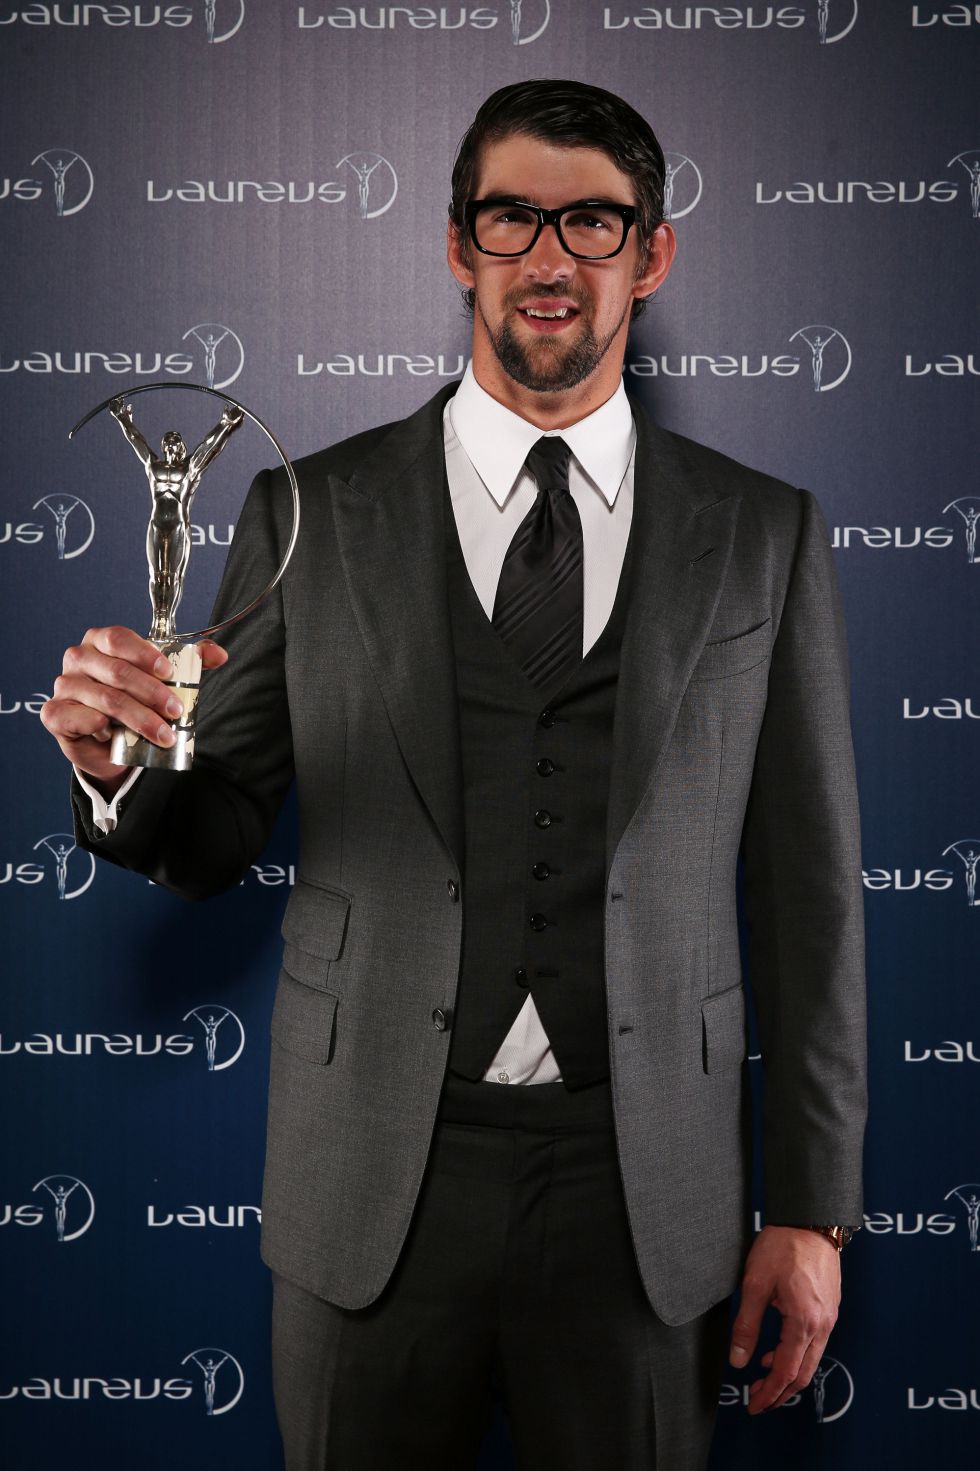 Michael Phelps gana el Premio Laureus al reto excepcional